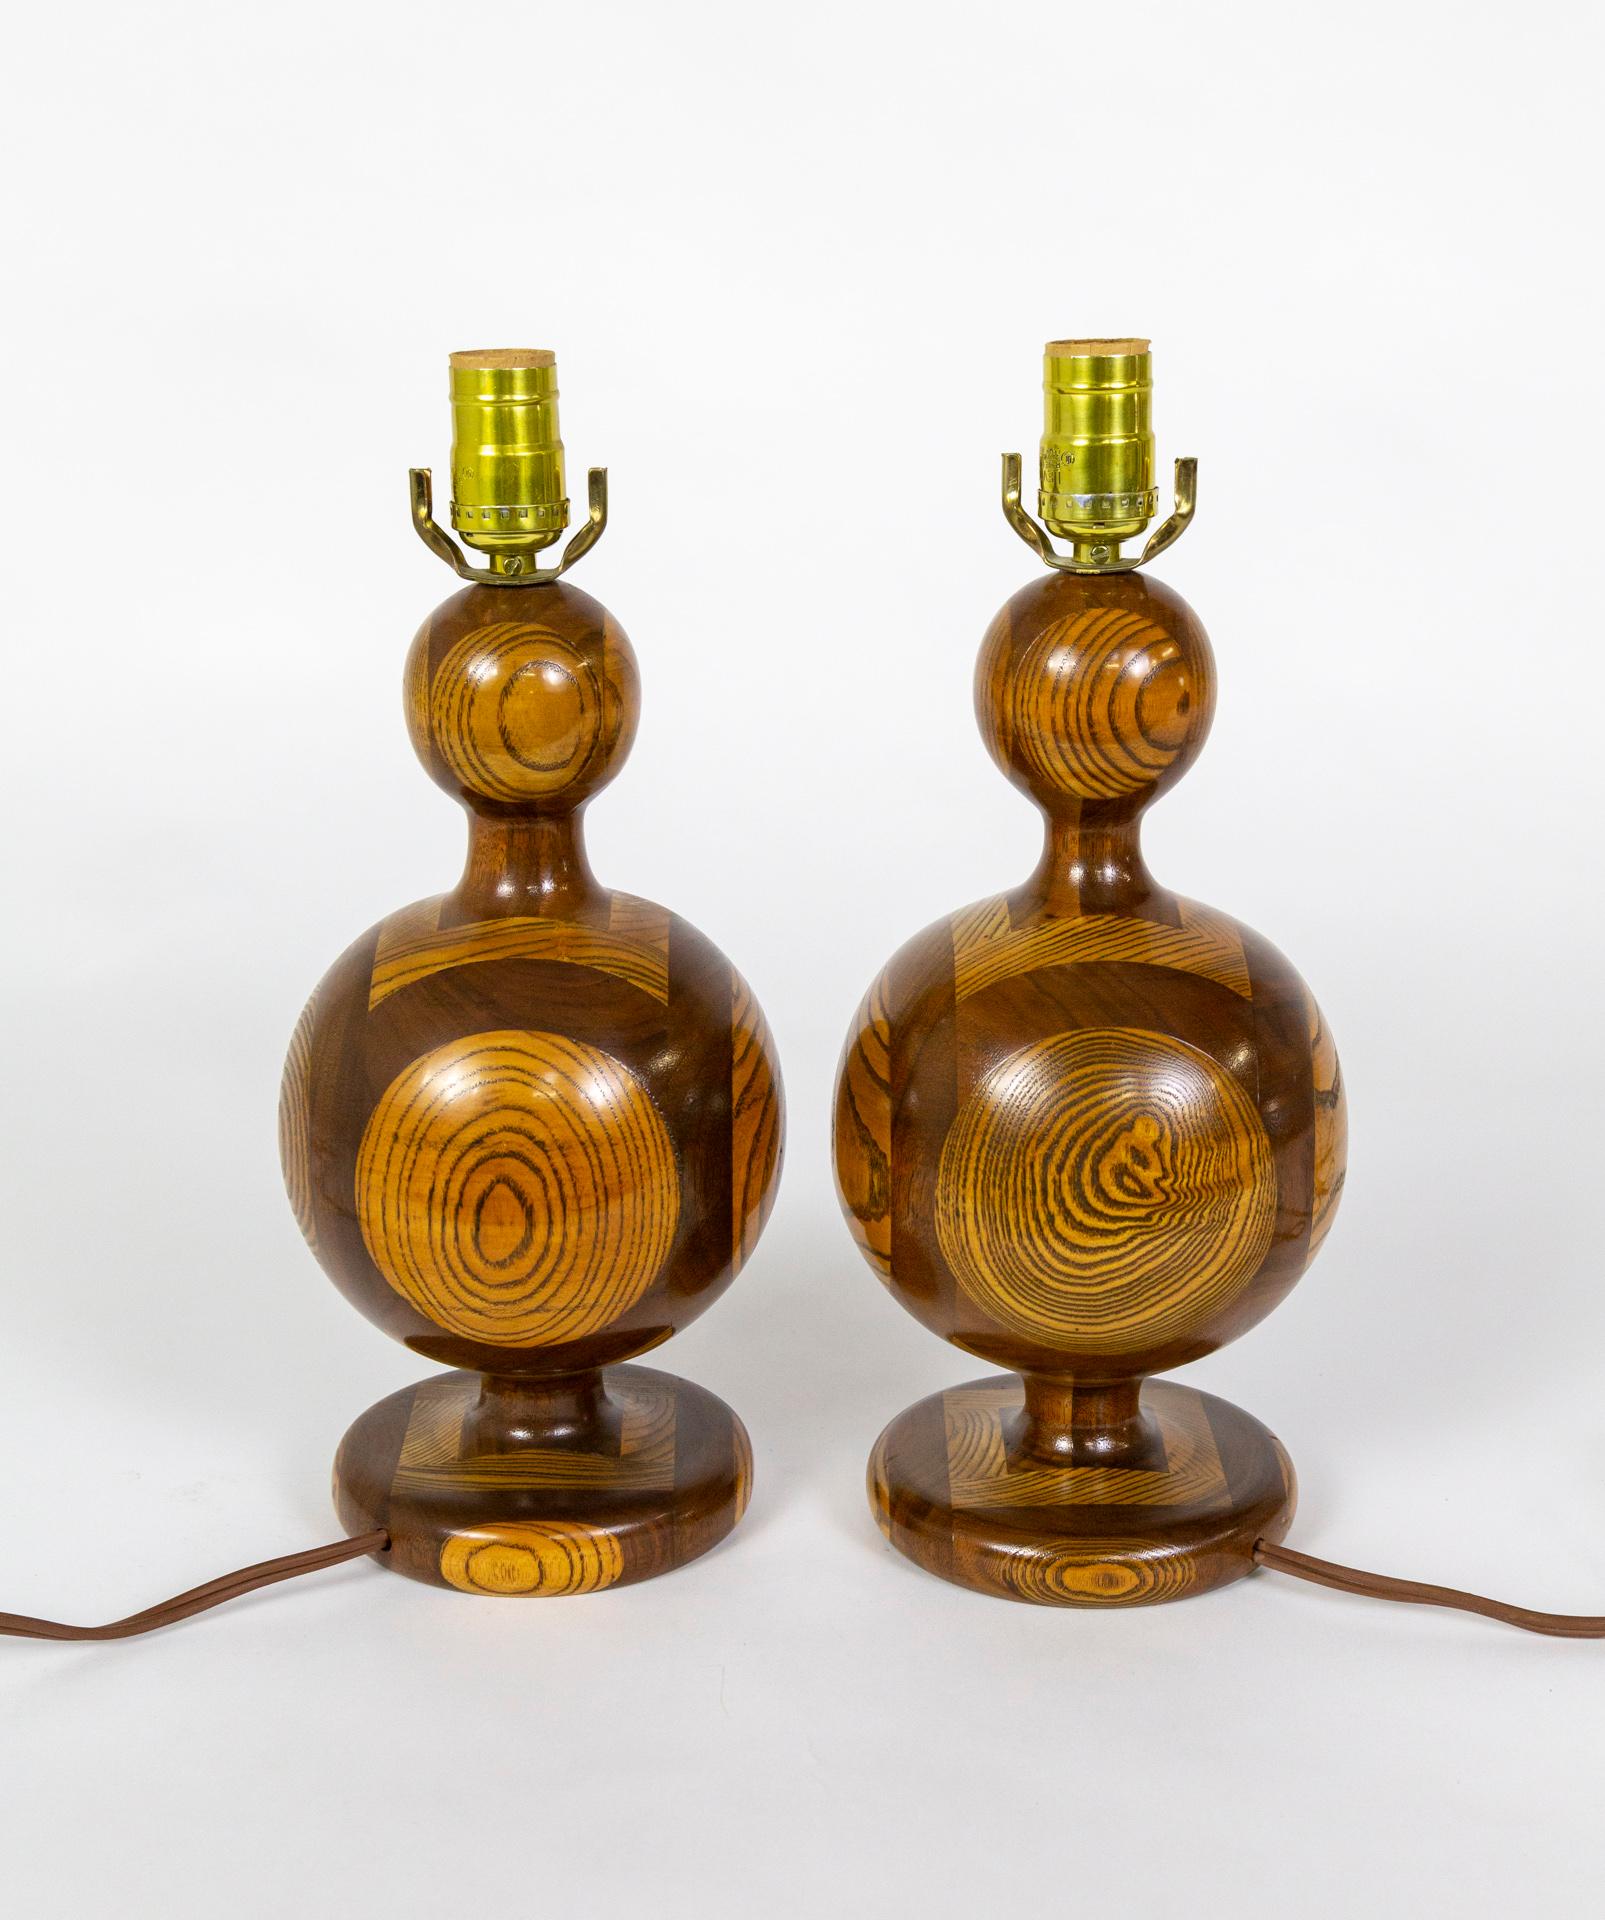 20th Century Segmented 'Inlaid-Esque' Turned Walnut/Cherry Wood Lamps, Pair